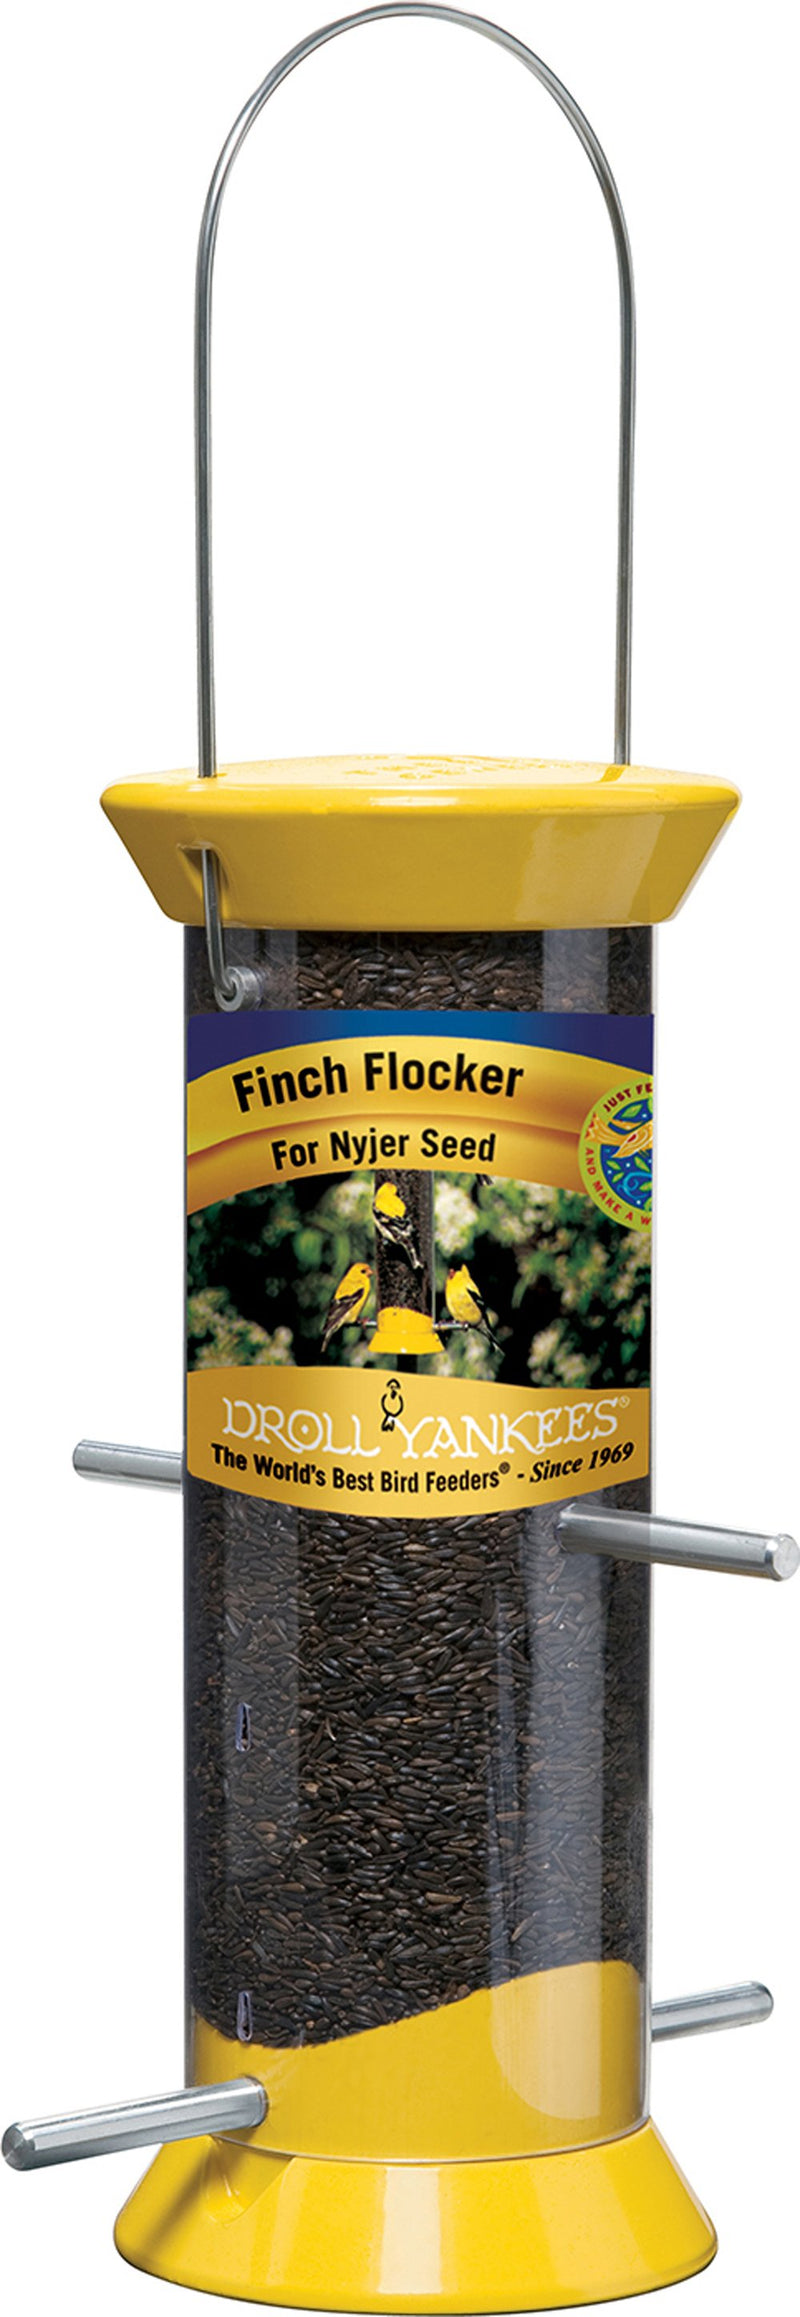 New Generation Finch Flocker Nyjer Seed Bird Feeder